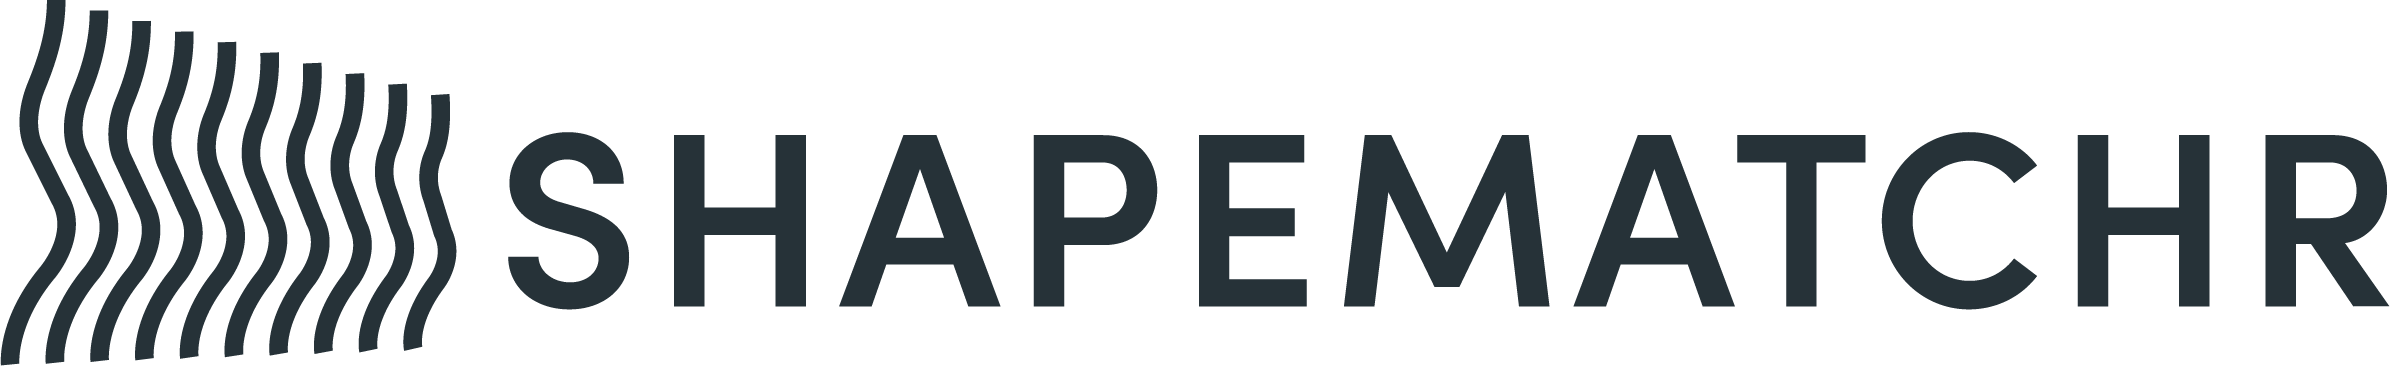 Shapematchr logo